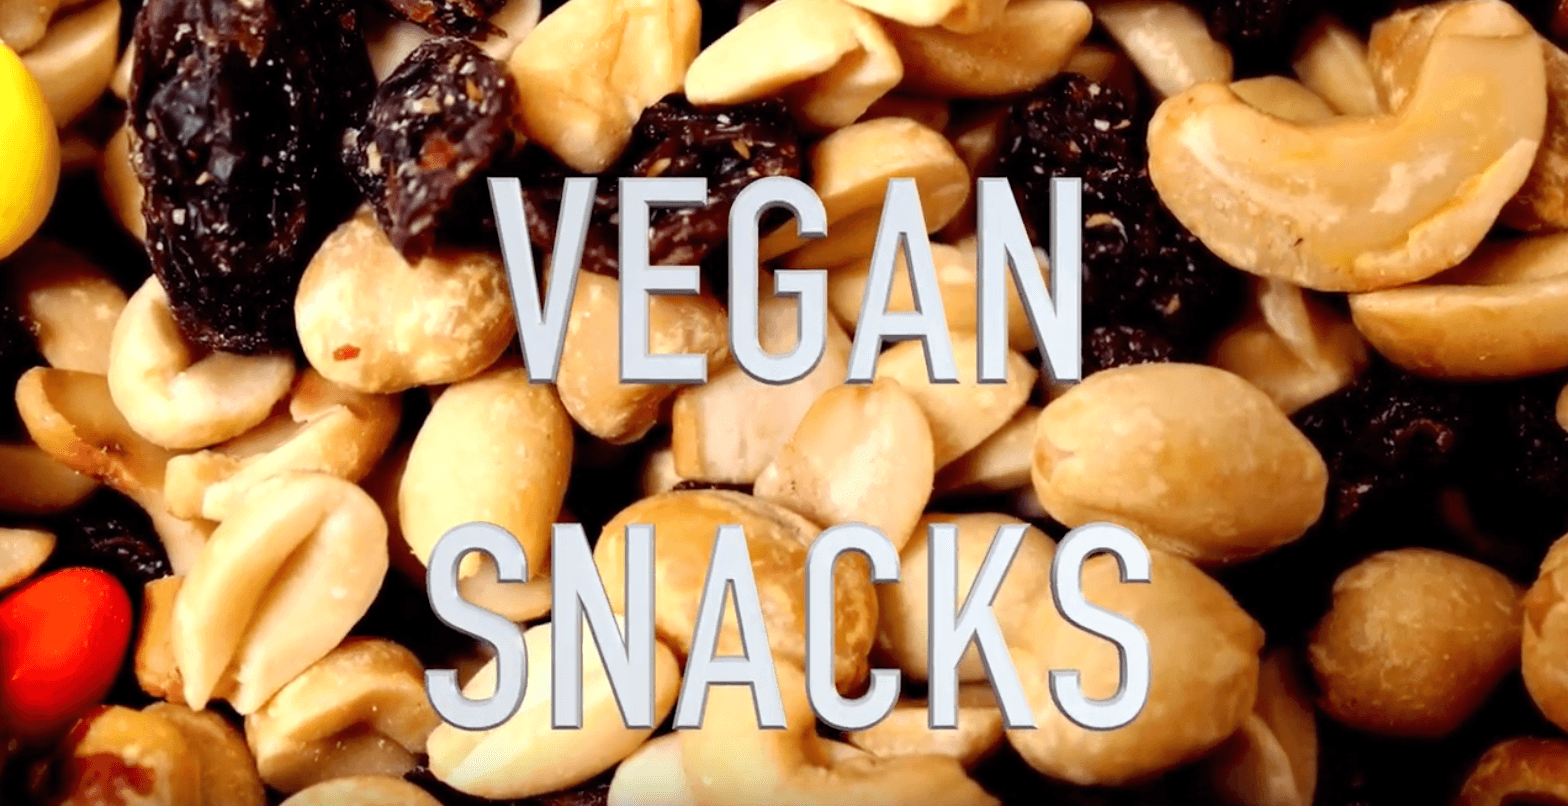 Easy Vegan Hack 30 for Veganuary - Vegan Snacks